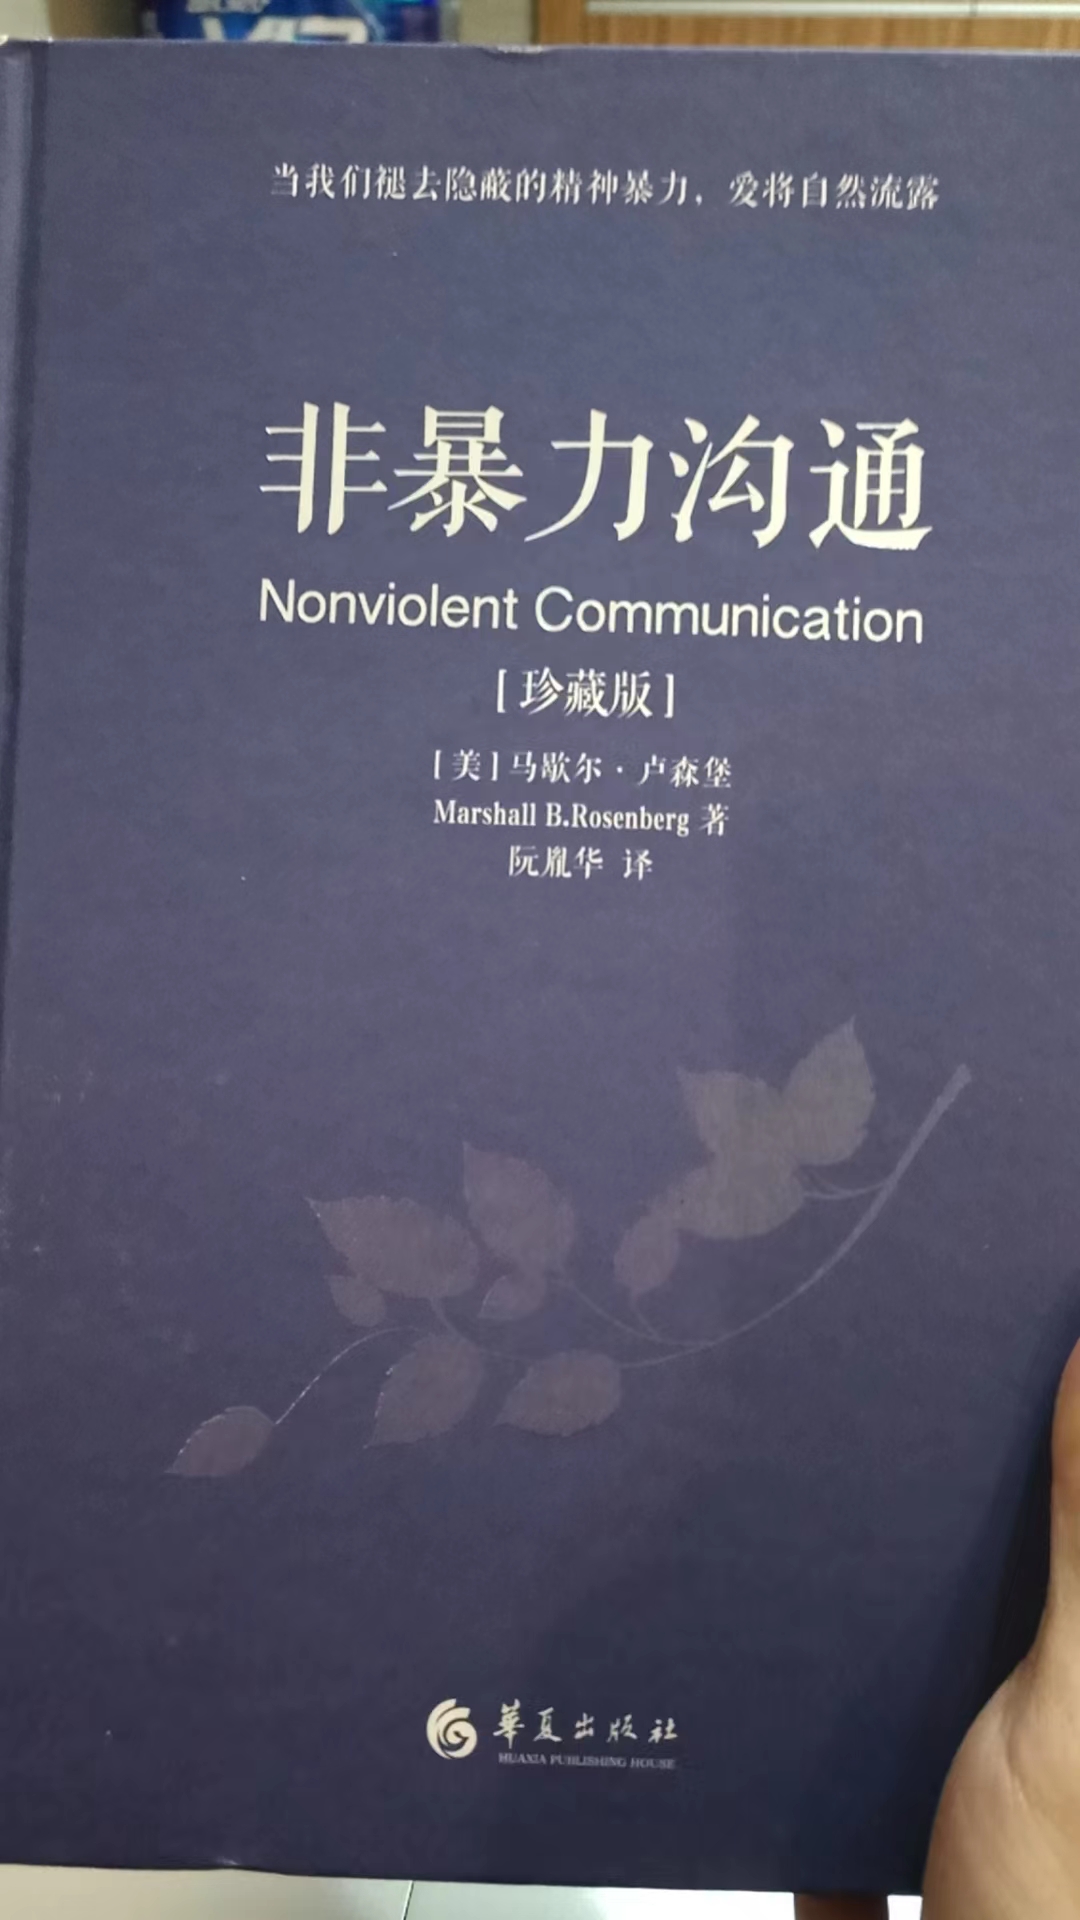 Non-violent Communication, Wenhao's recc